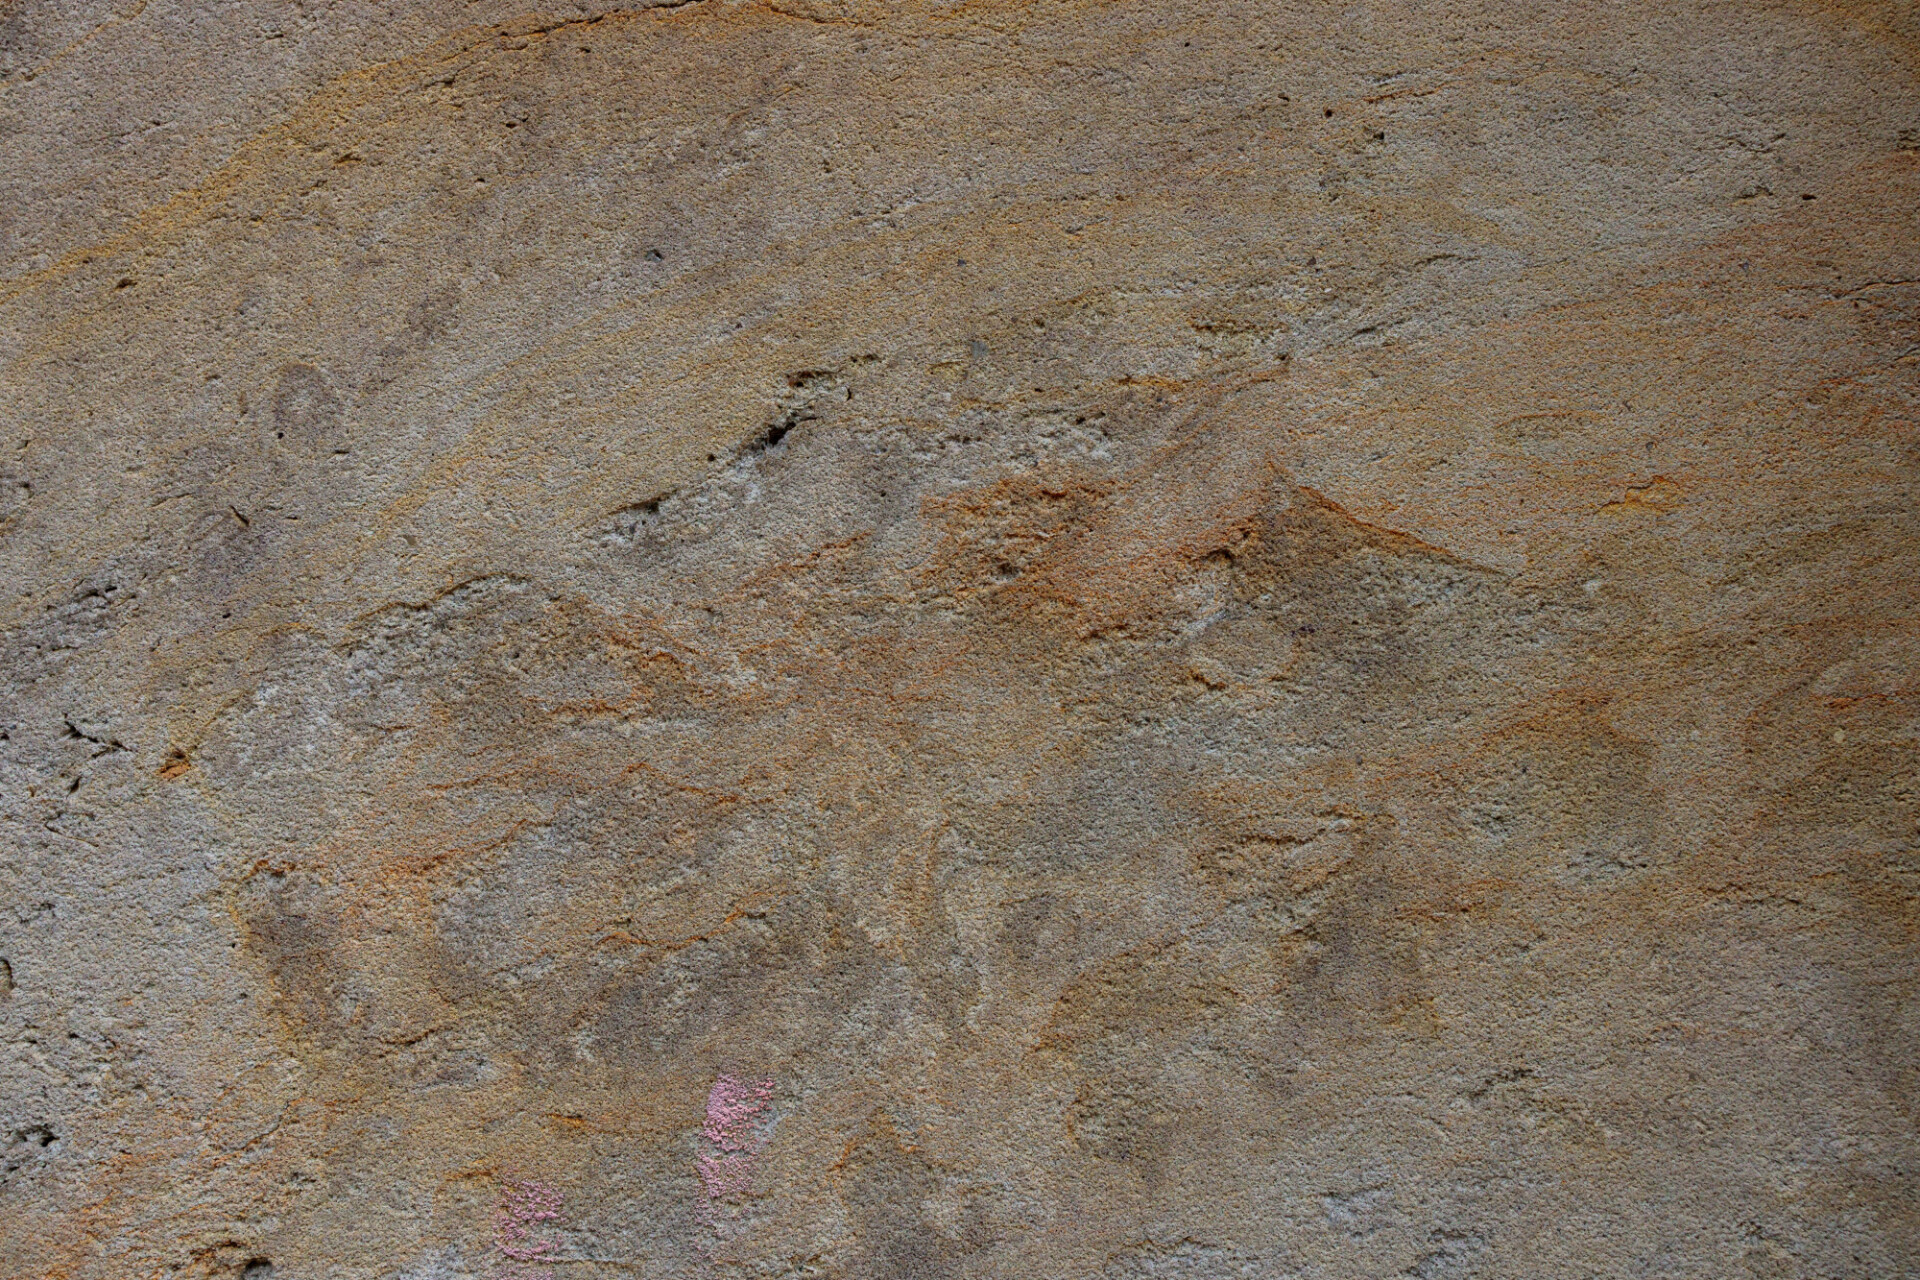 Reddish rock wall texture